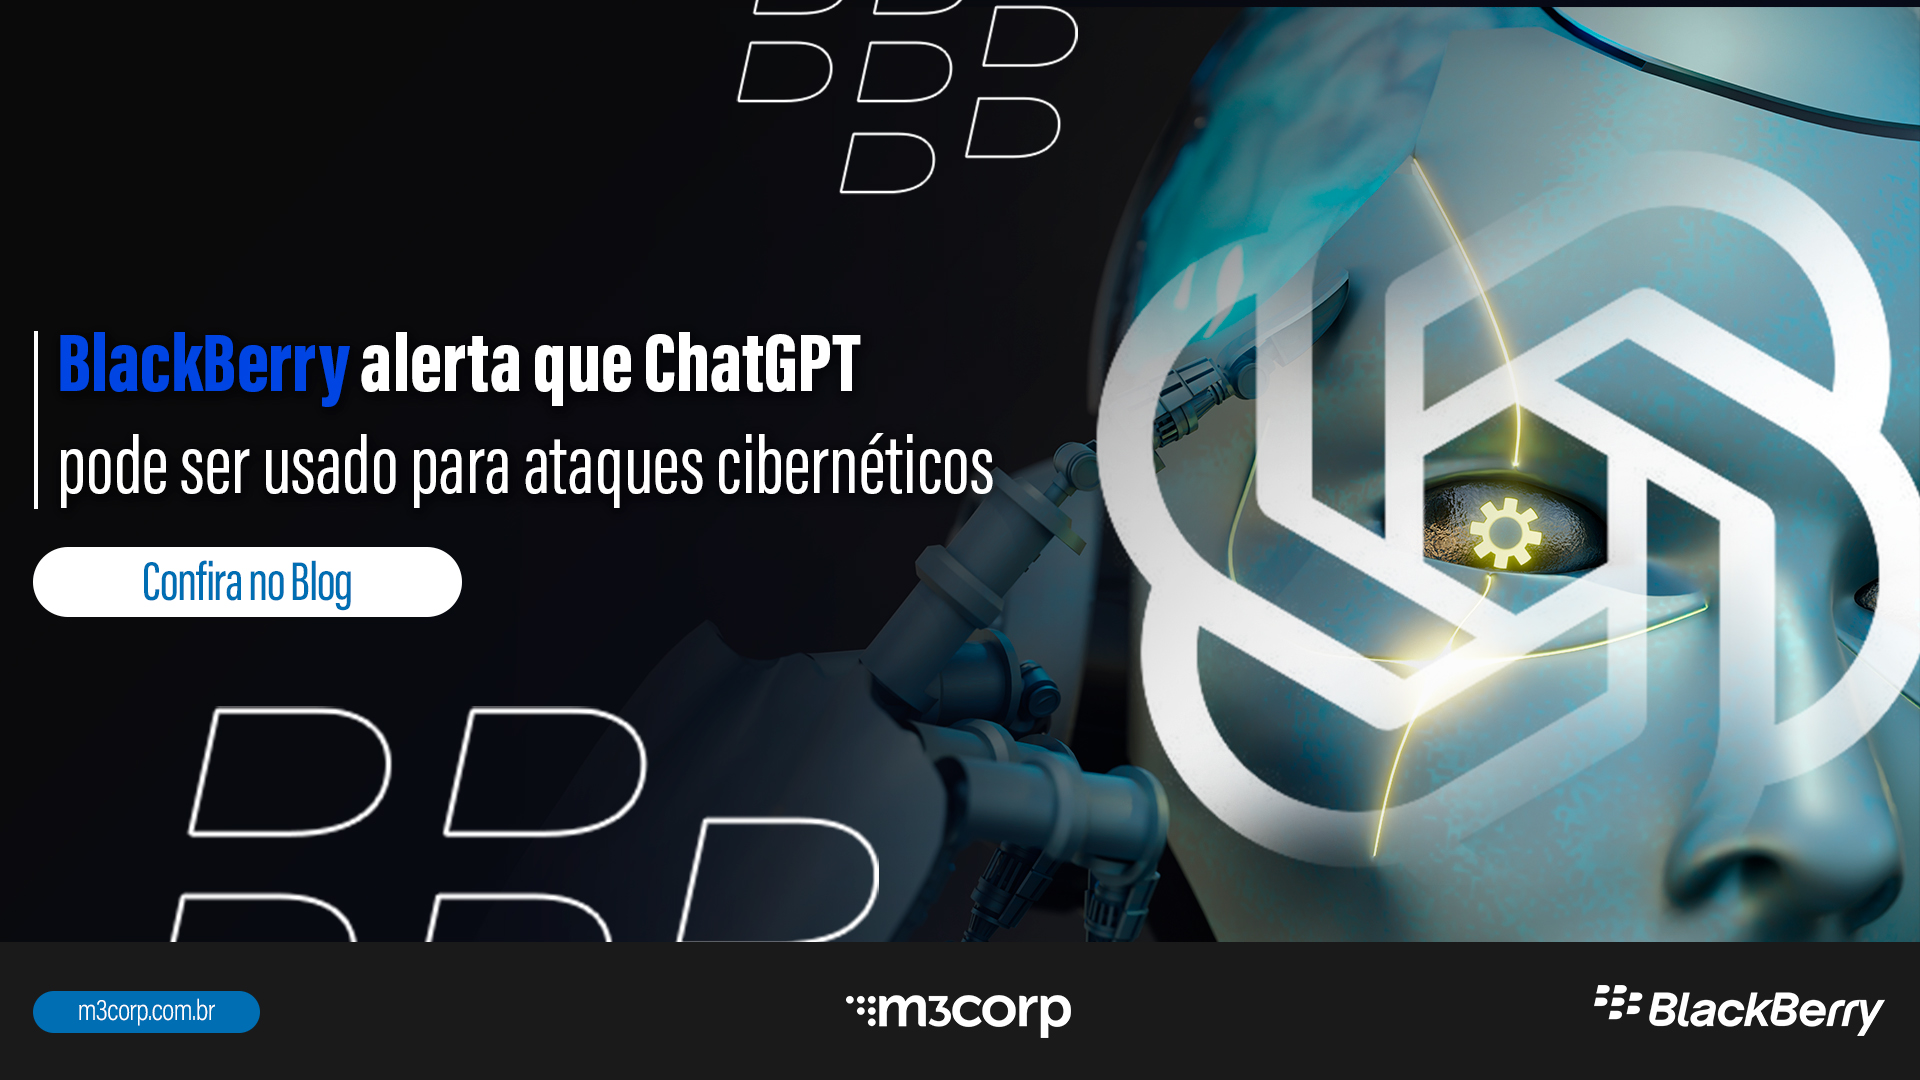 BlackBerry alerta que ChatGPT pode ser usado para ataques cibernéticos